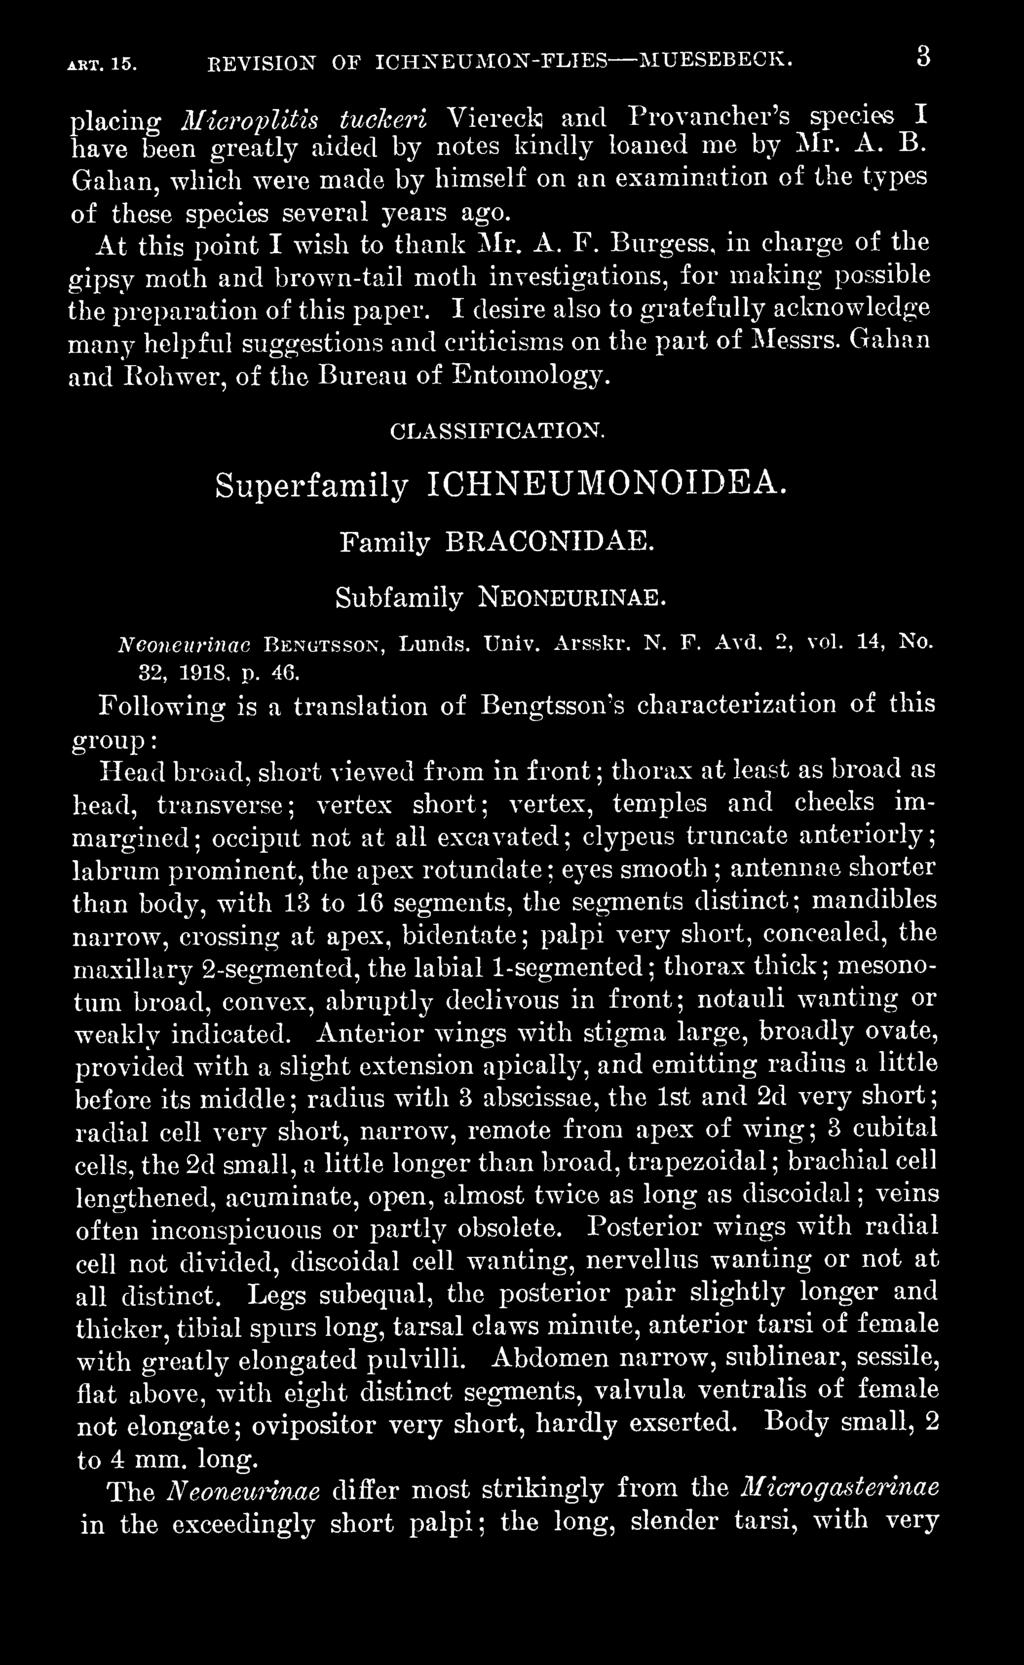 Family BRACONIDAE. Subfamily Neoneurinae. Neoneurinac Bengtsson, Lunds. Univ. Arsskr. N. F. Avd. 2, vol. 14, No. 32, 1918, p. 46.